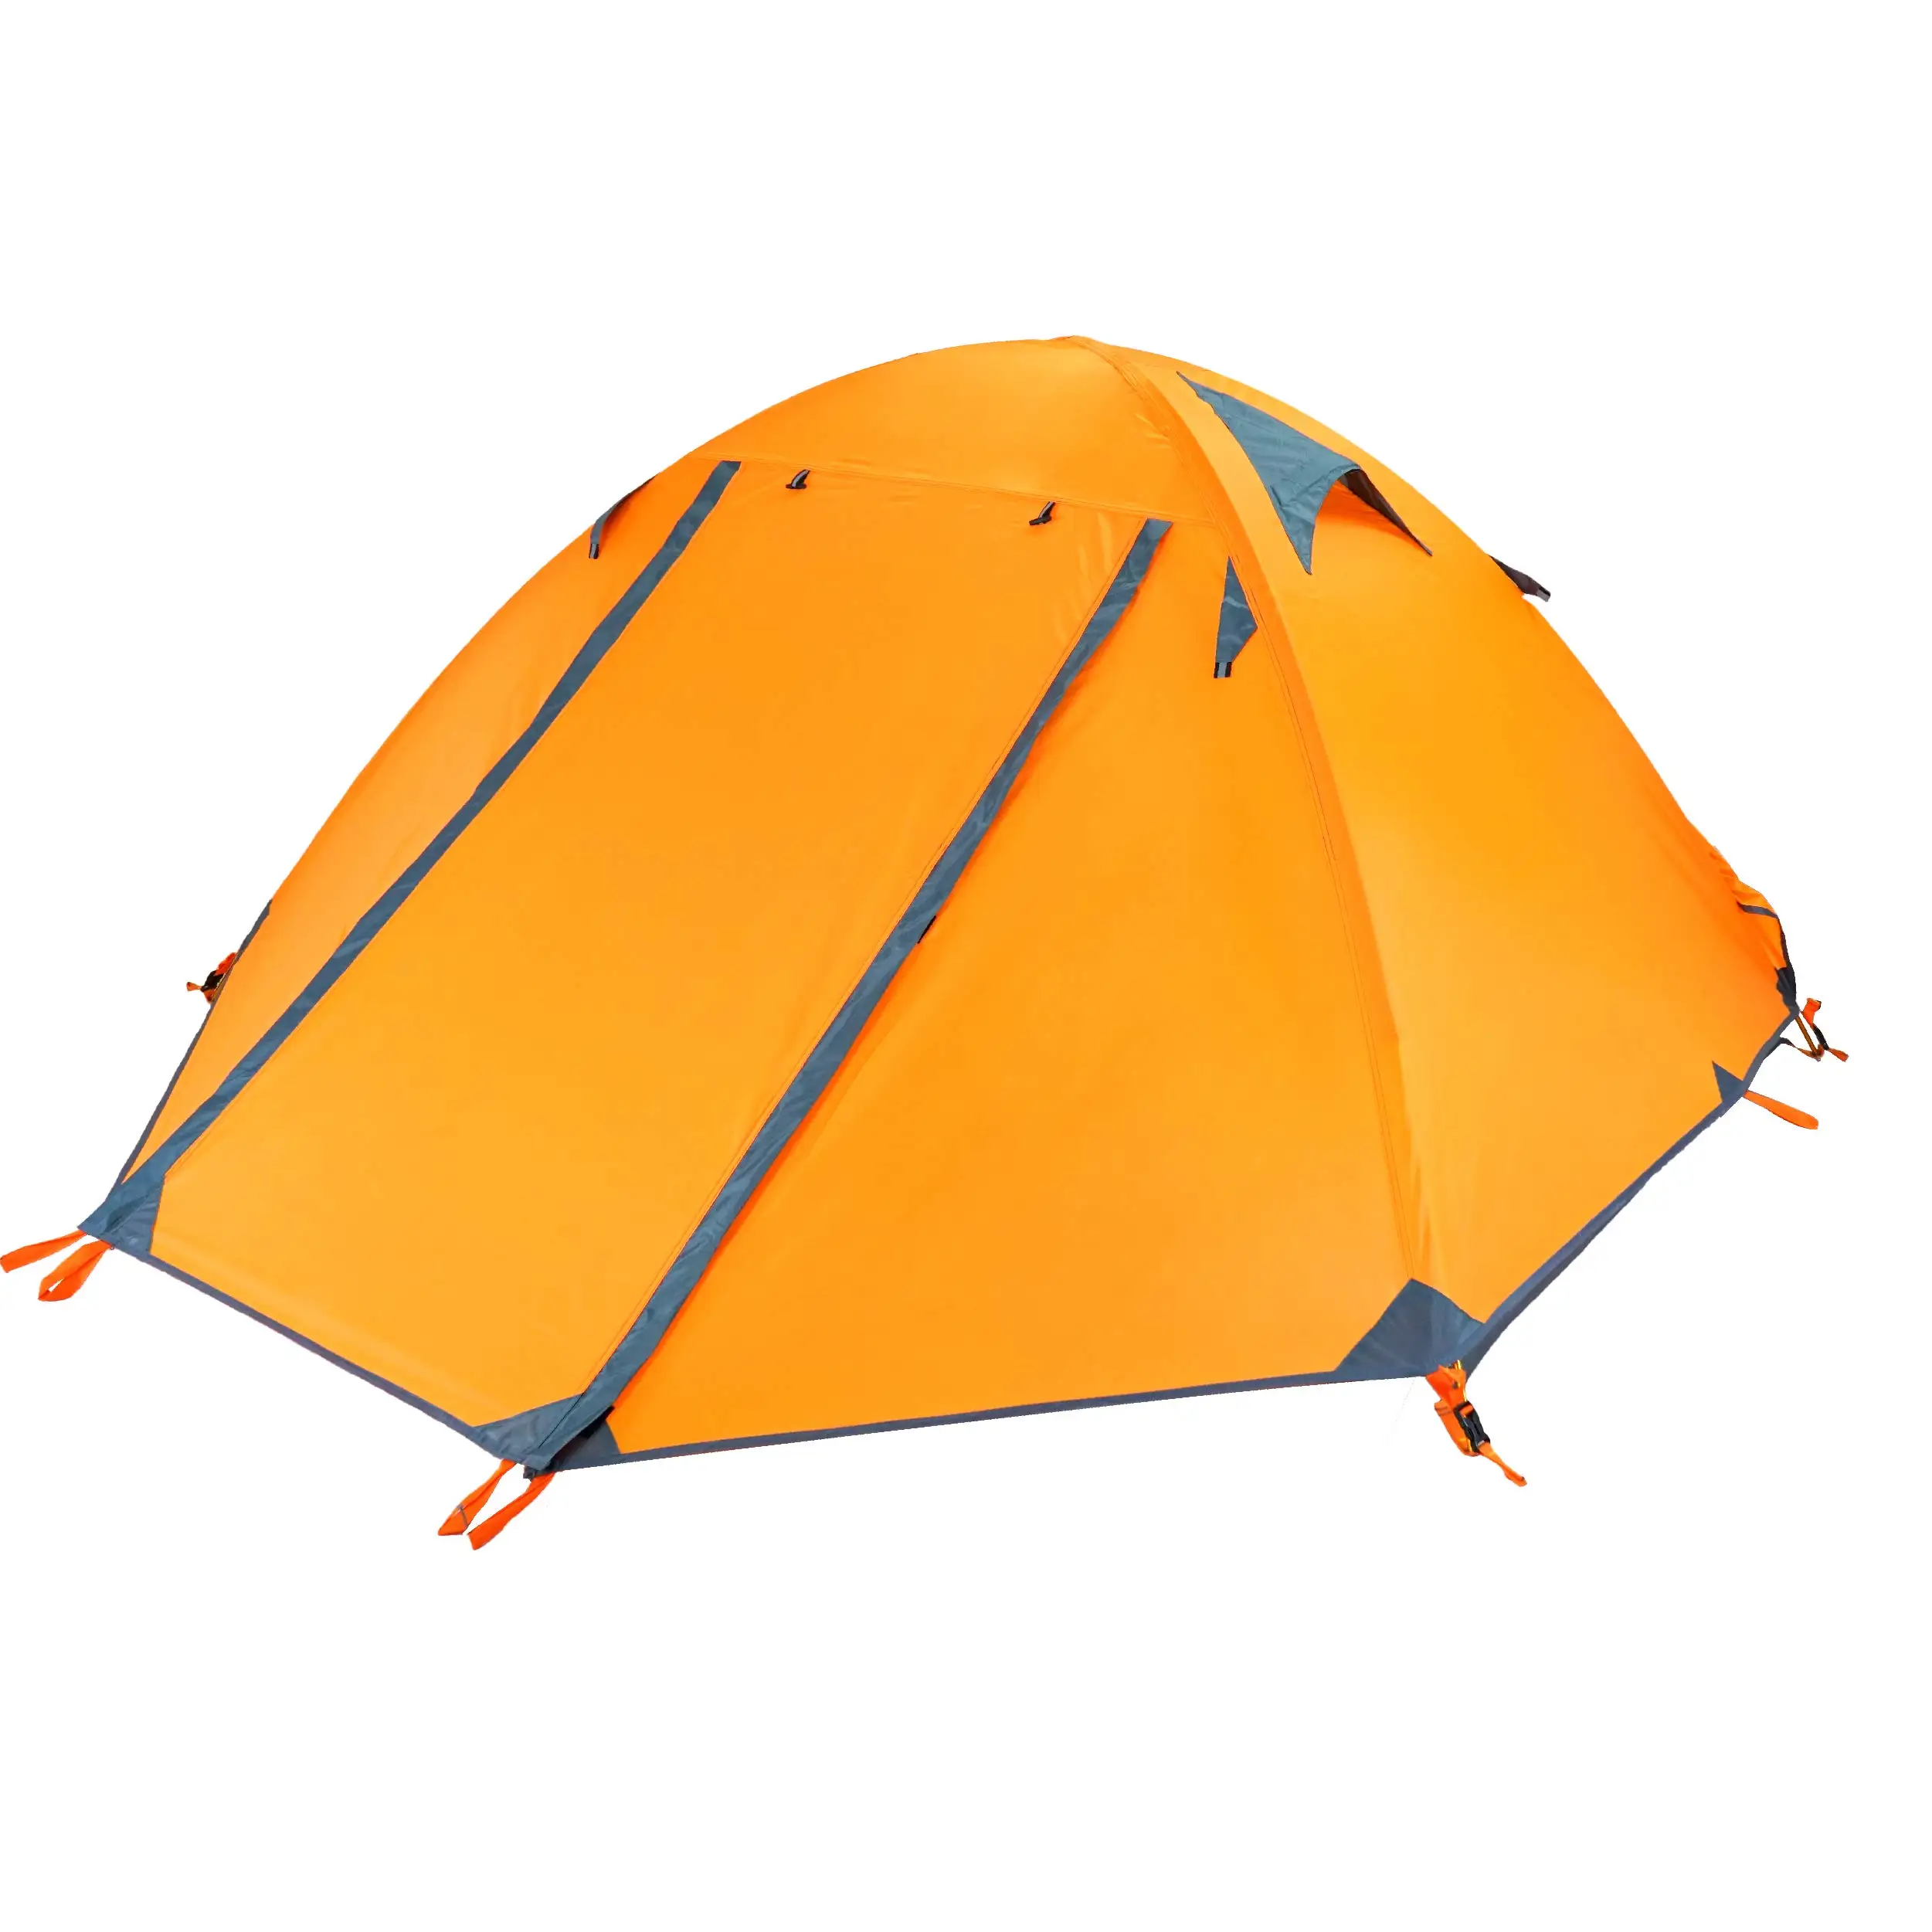 

2-Man 4-Season Waterproof Camping Tent for Backpacking, Hiking, Trekking, Climbing, and Travel Activities